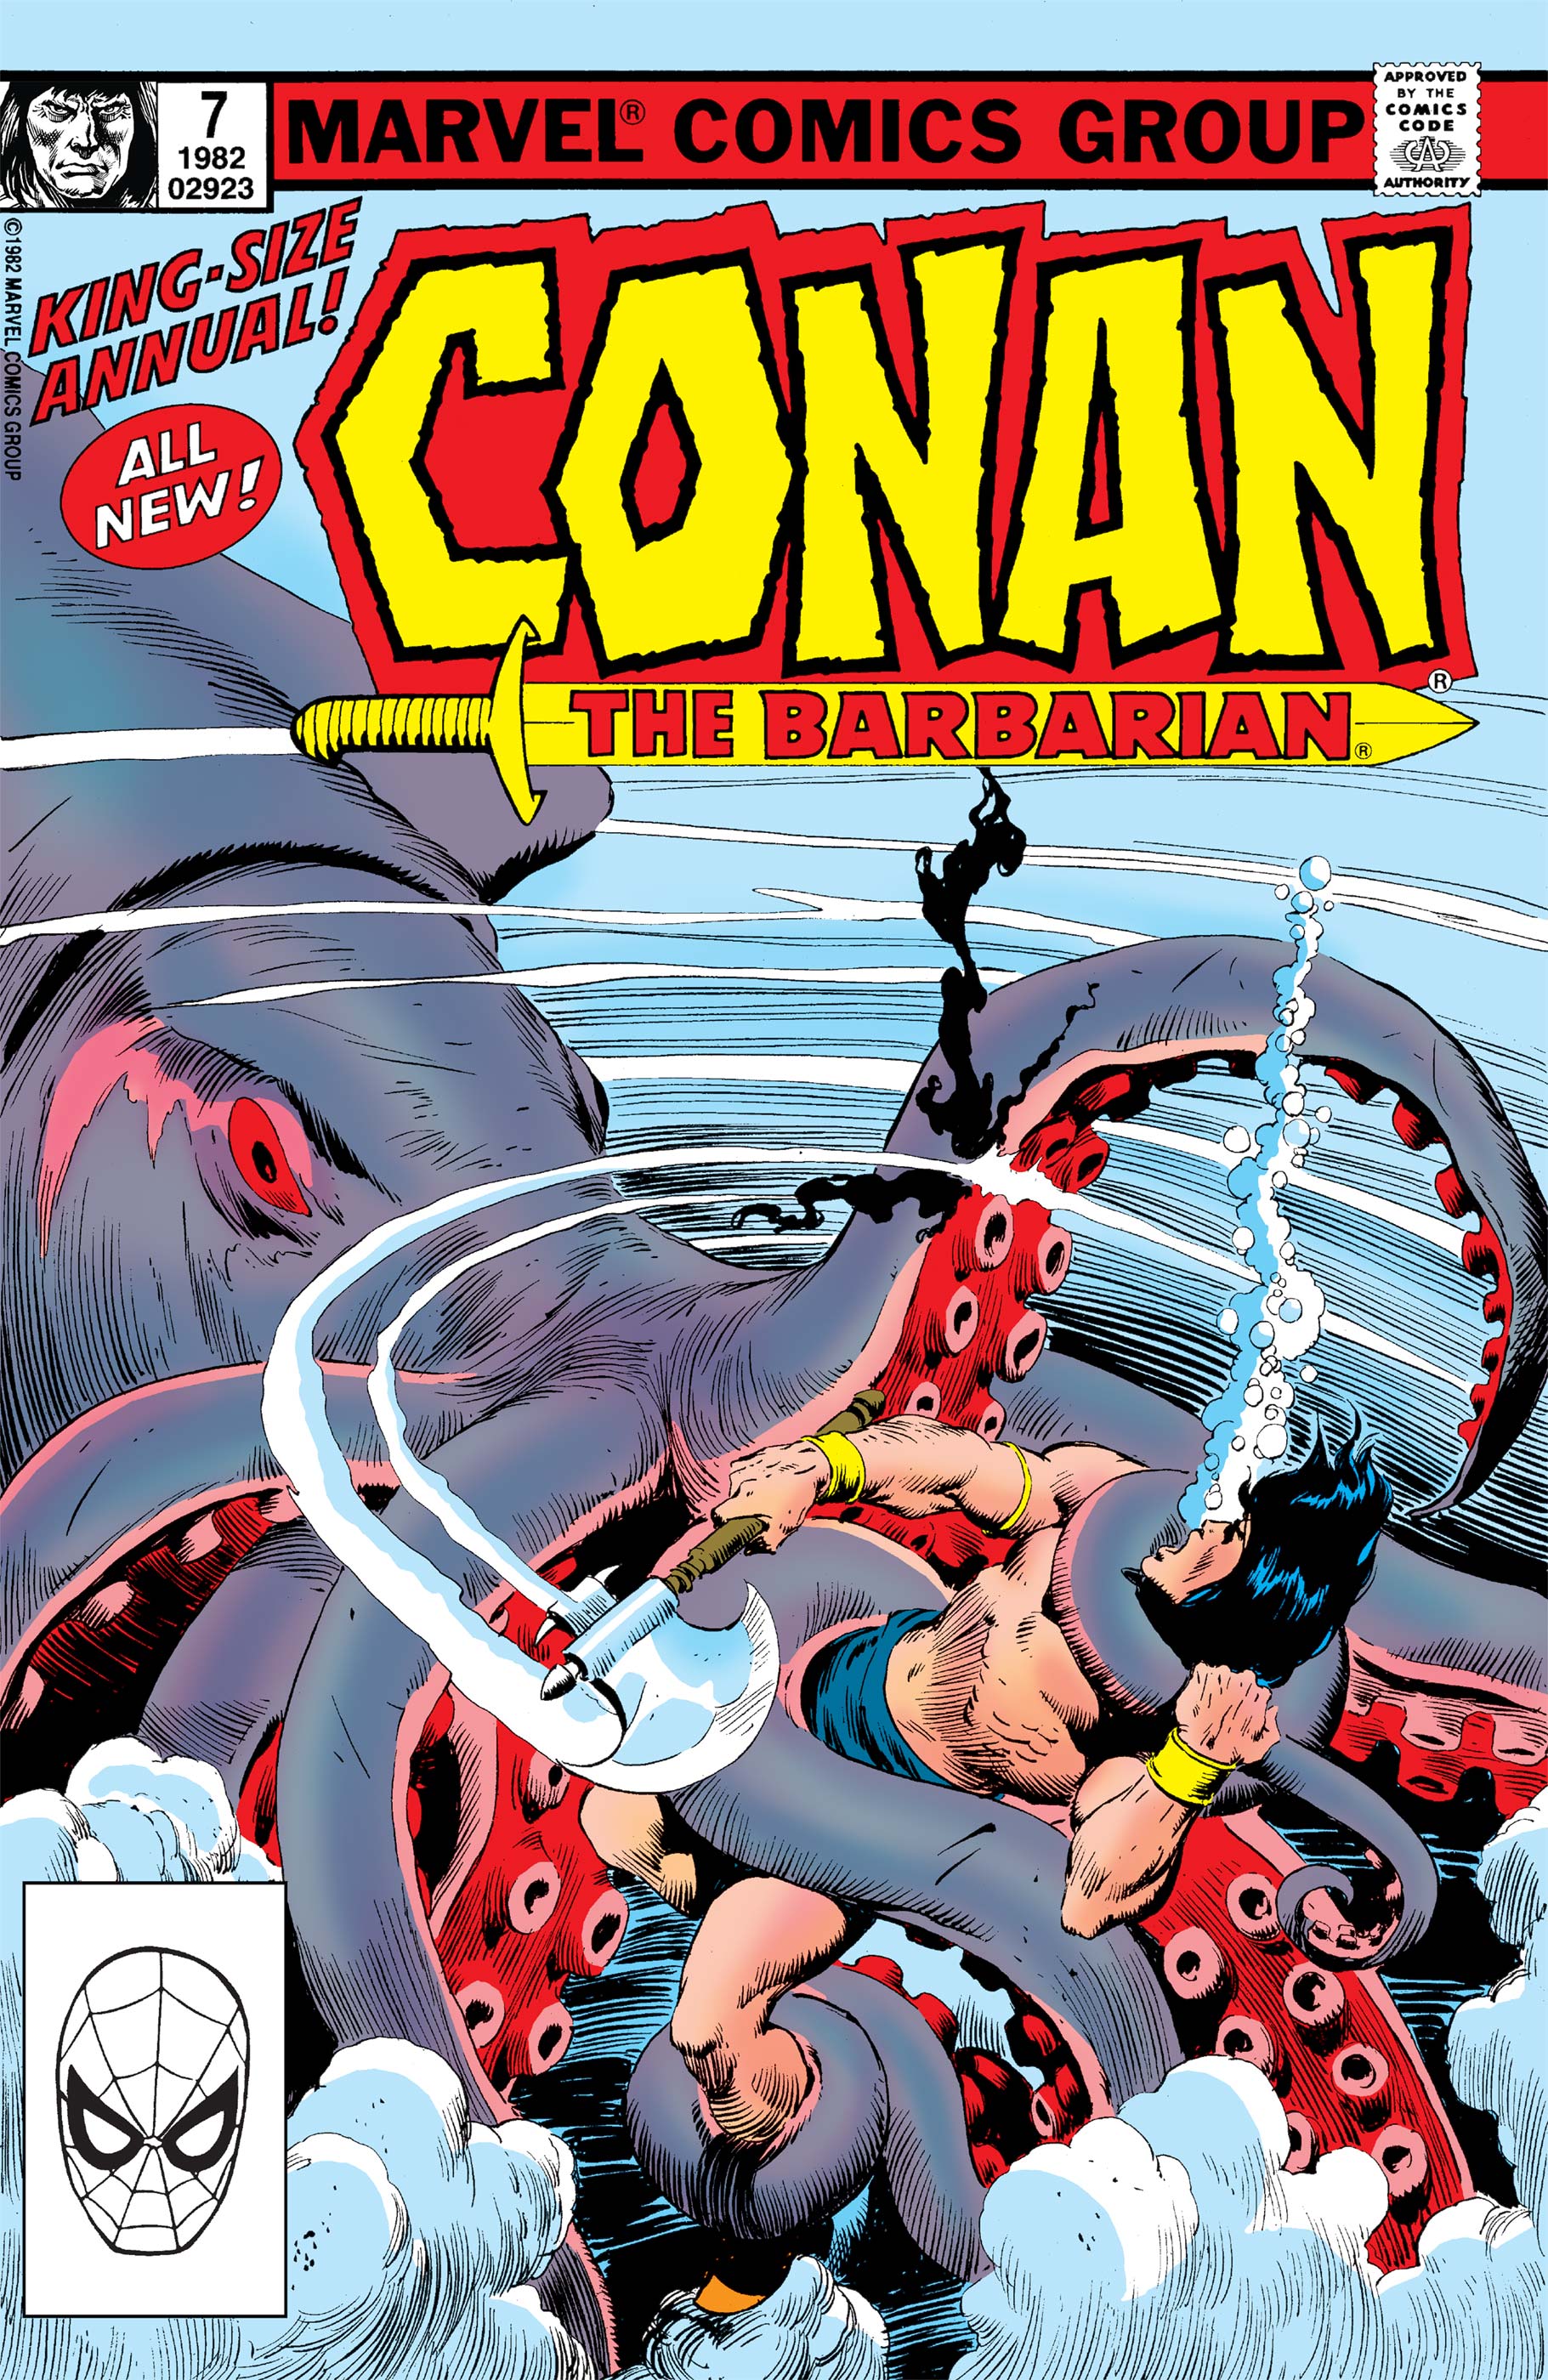 Conan Annual (1973) #7